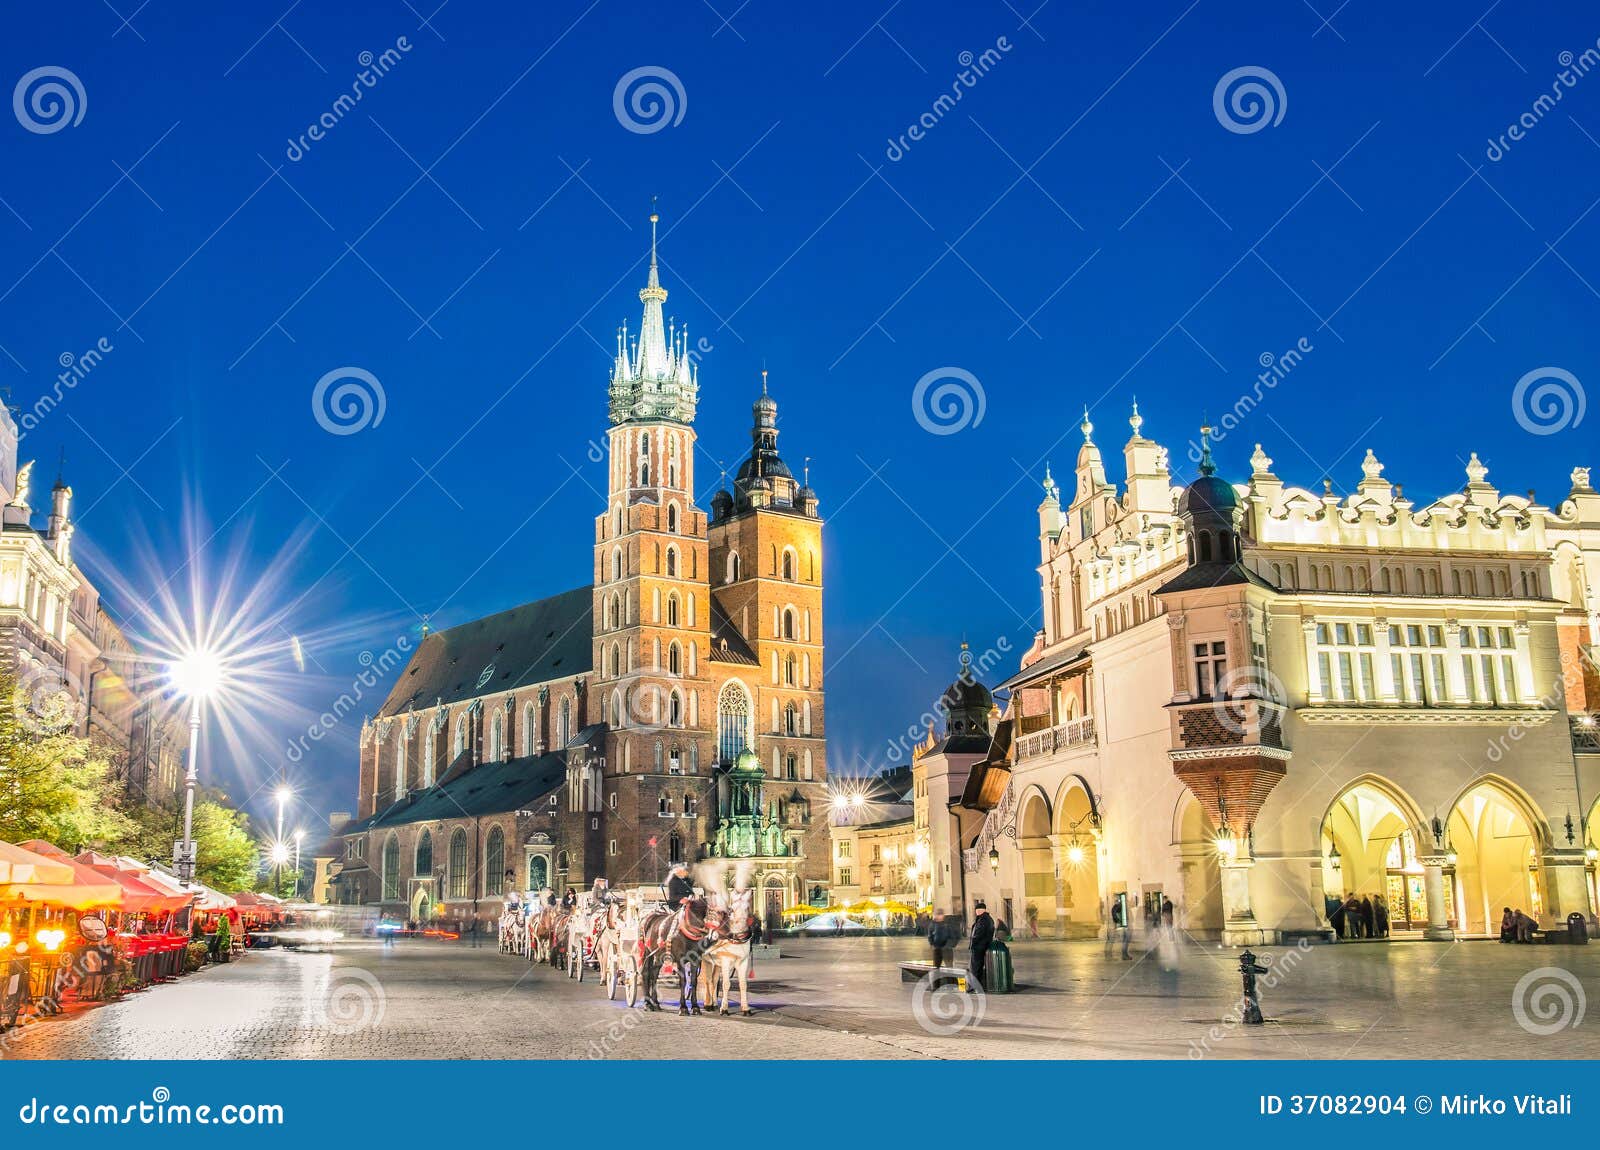 rynek glowny - the main square of krakow in poland